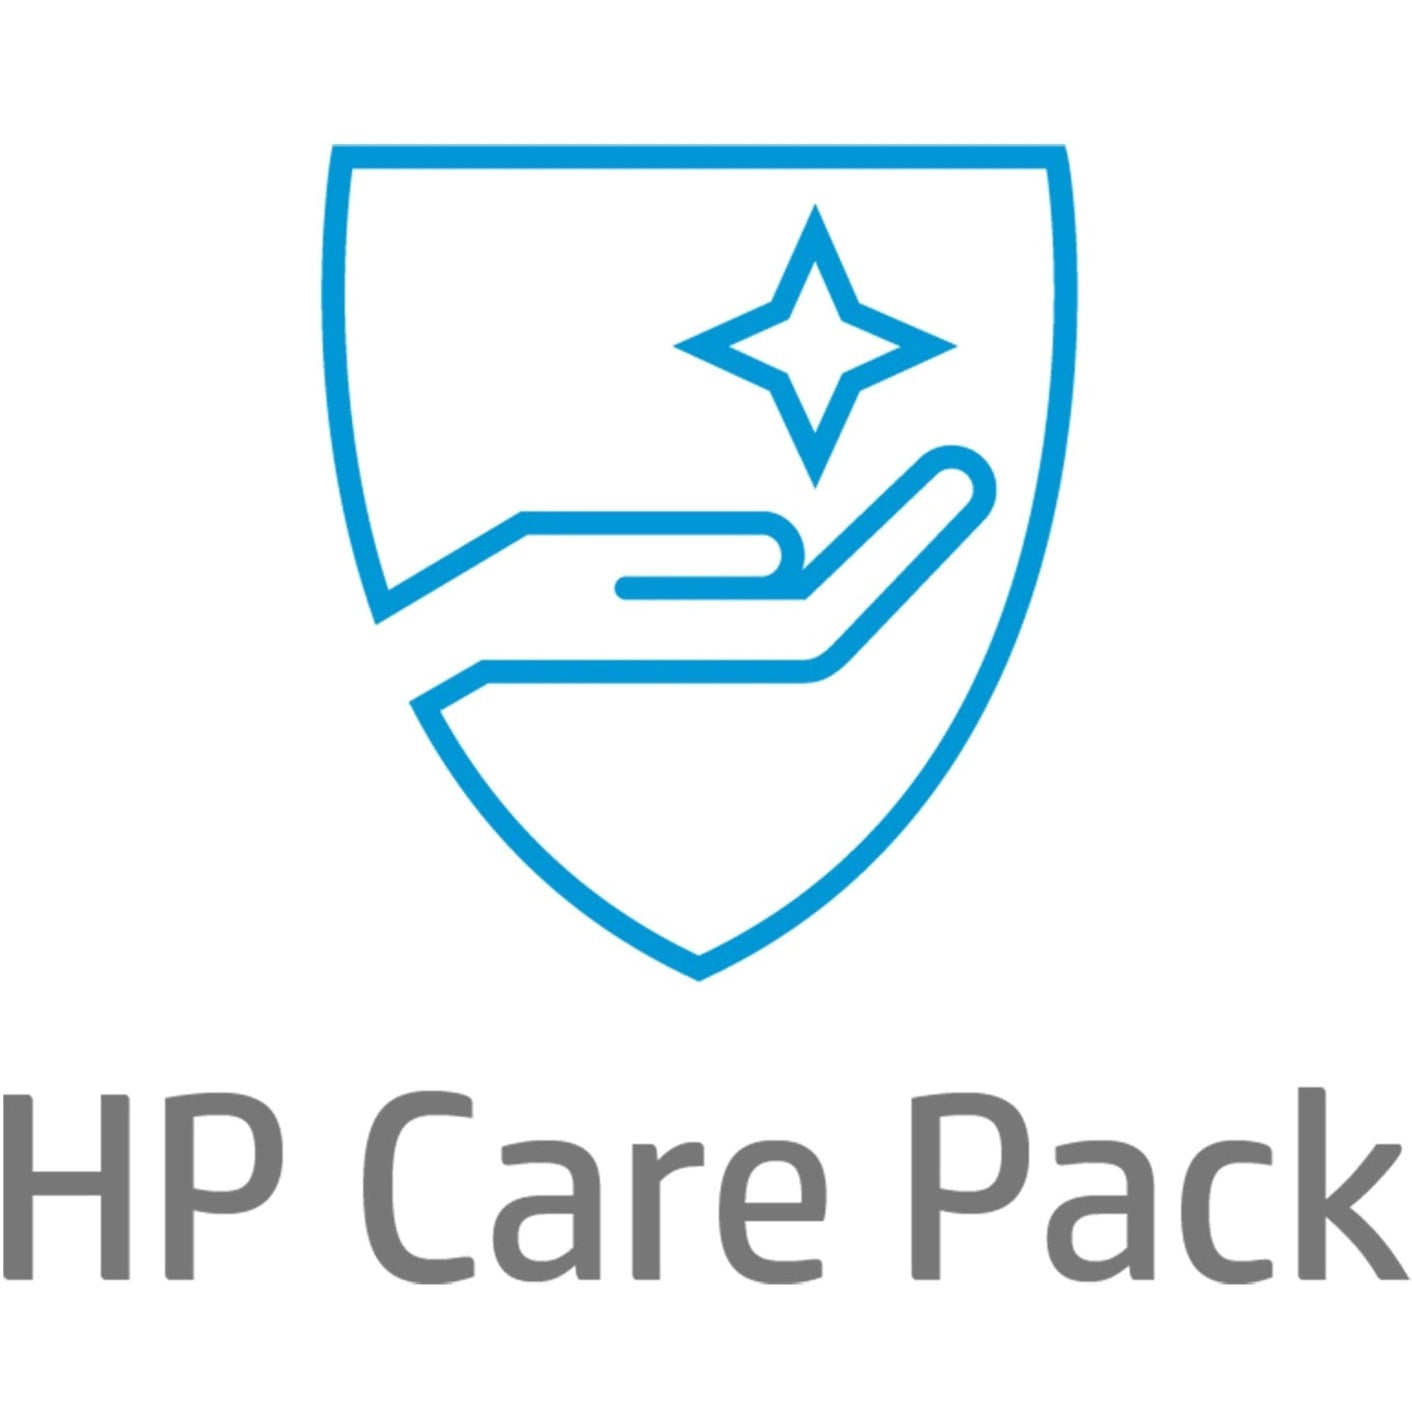 HP Care Pack - 3 Year - Service (UQ832E)